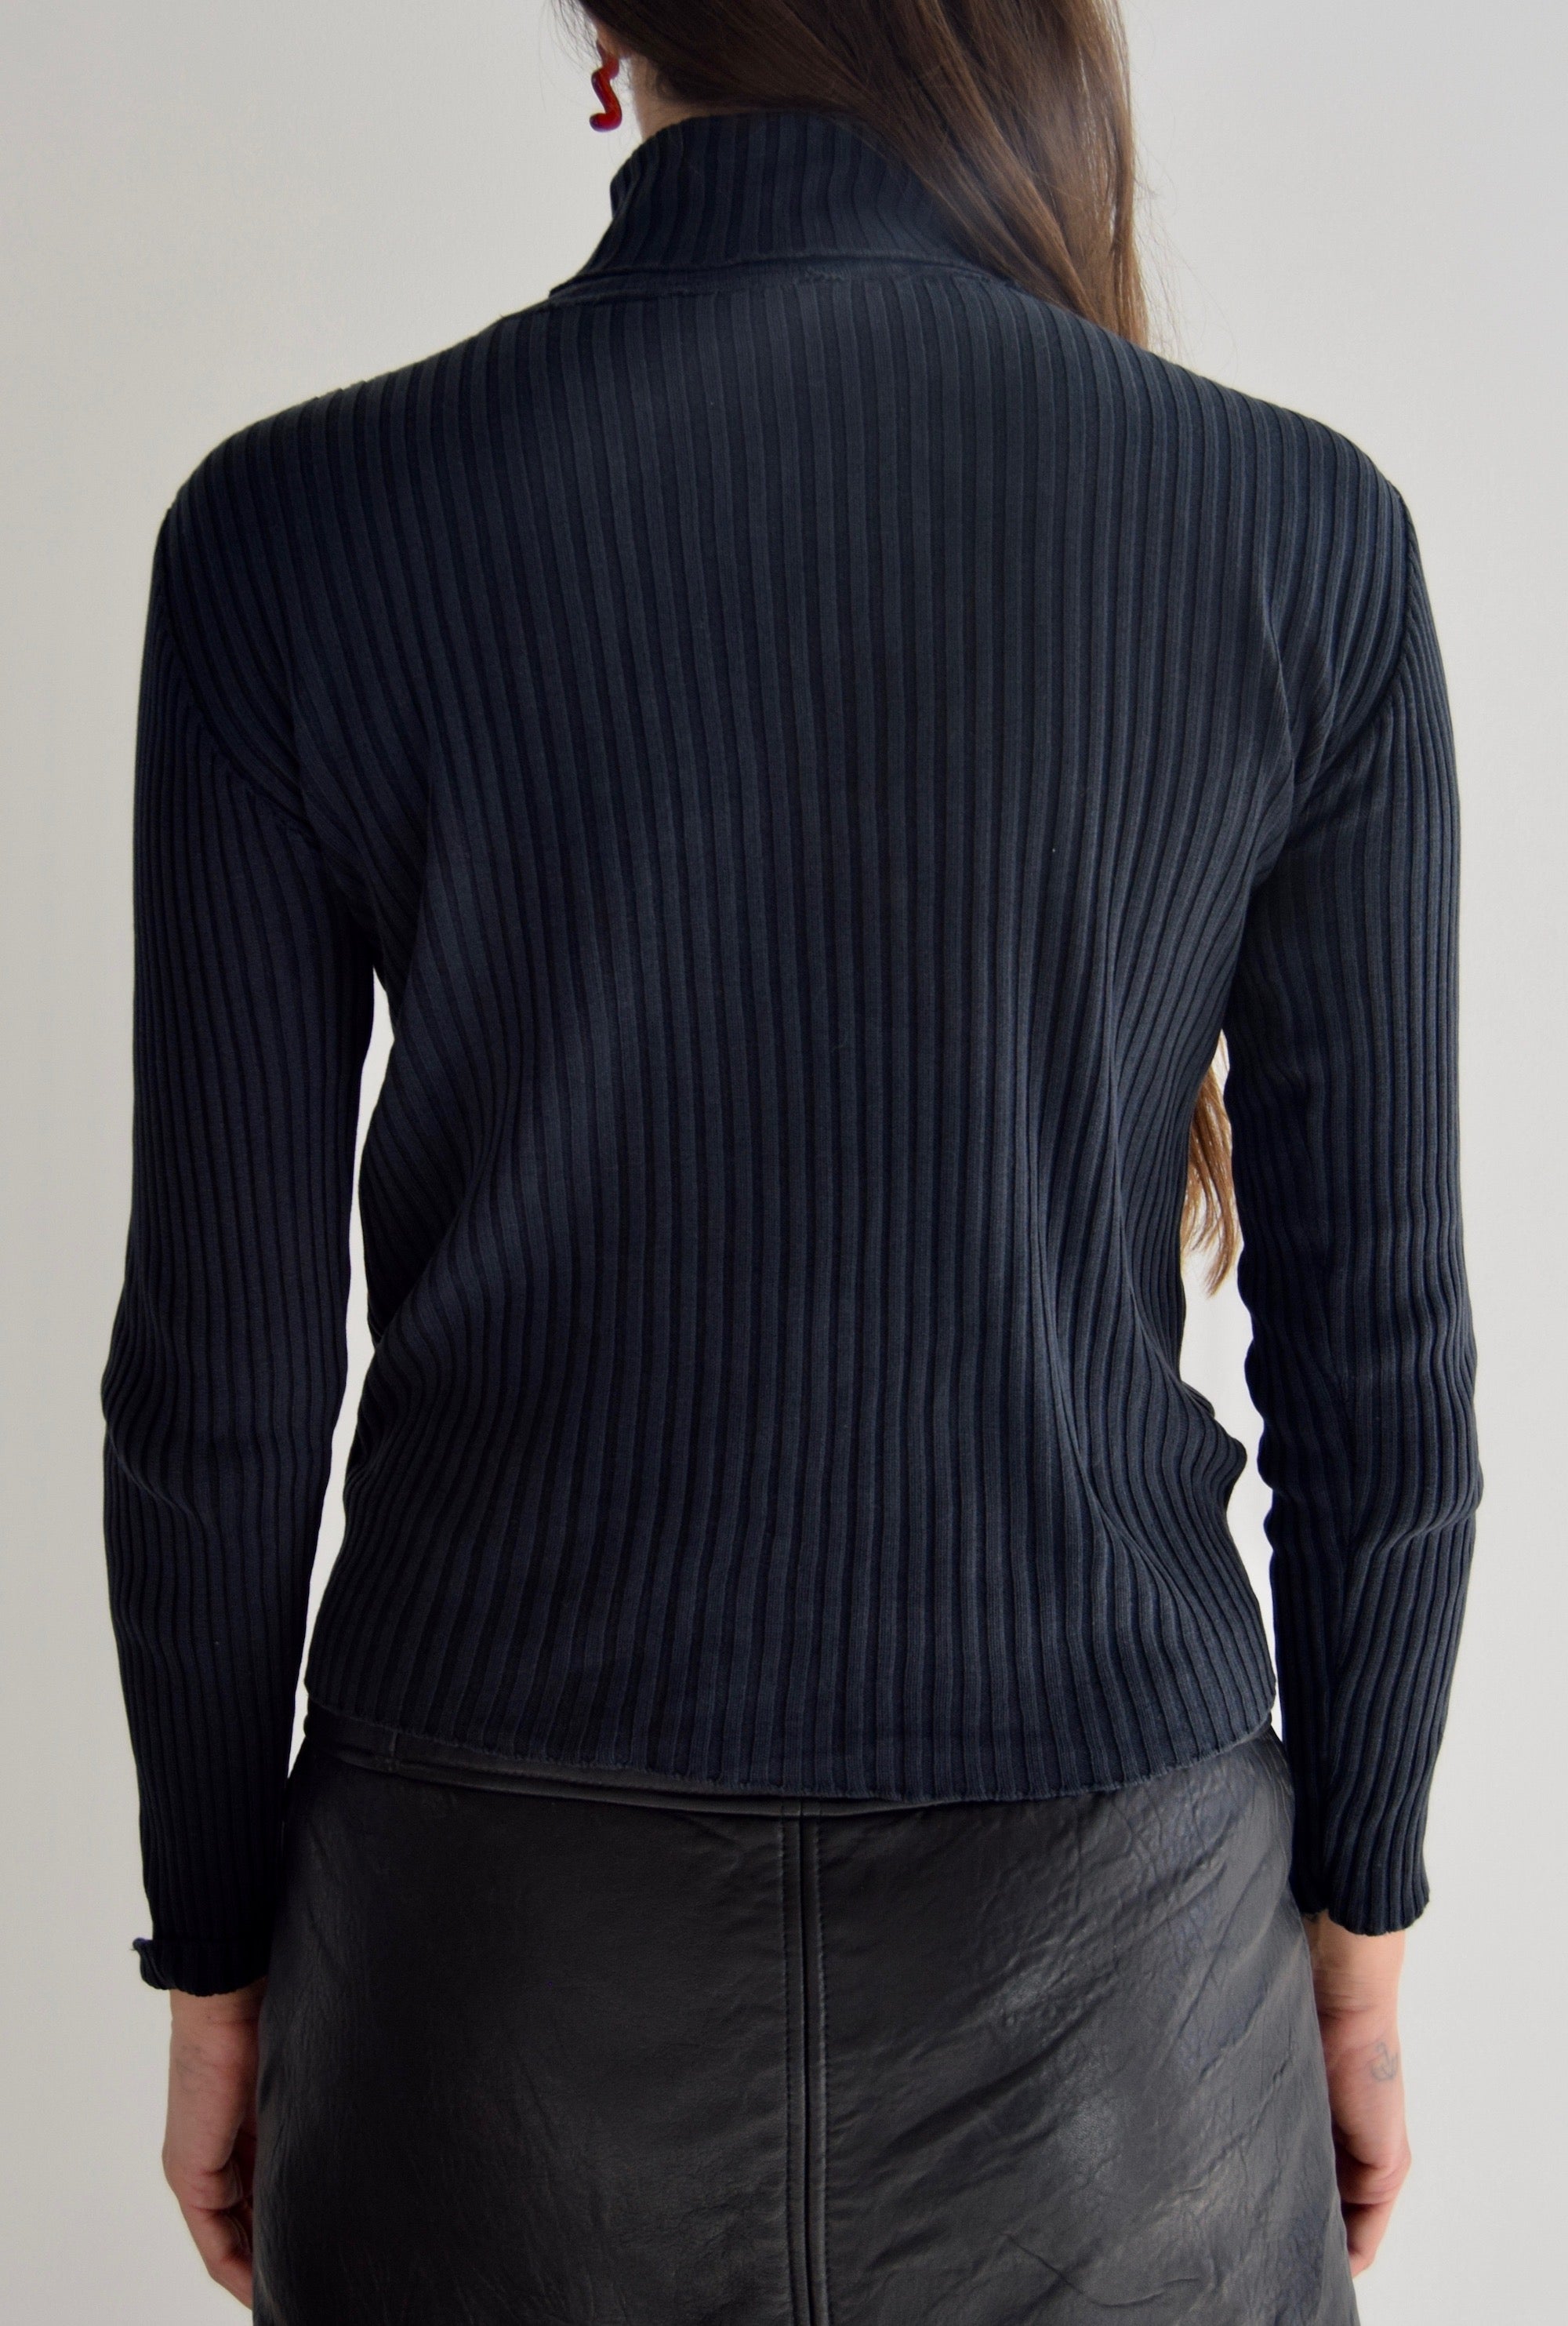 Anchor Black Silk Ribbed Turtleneck Sweater